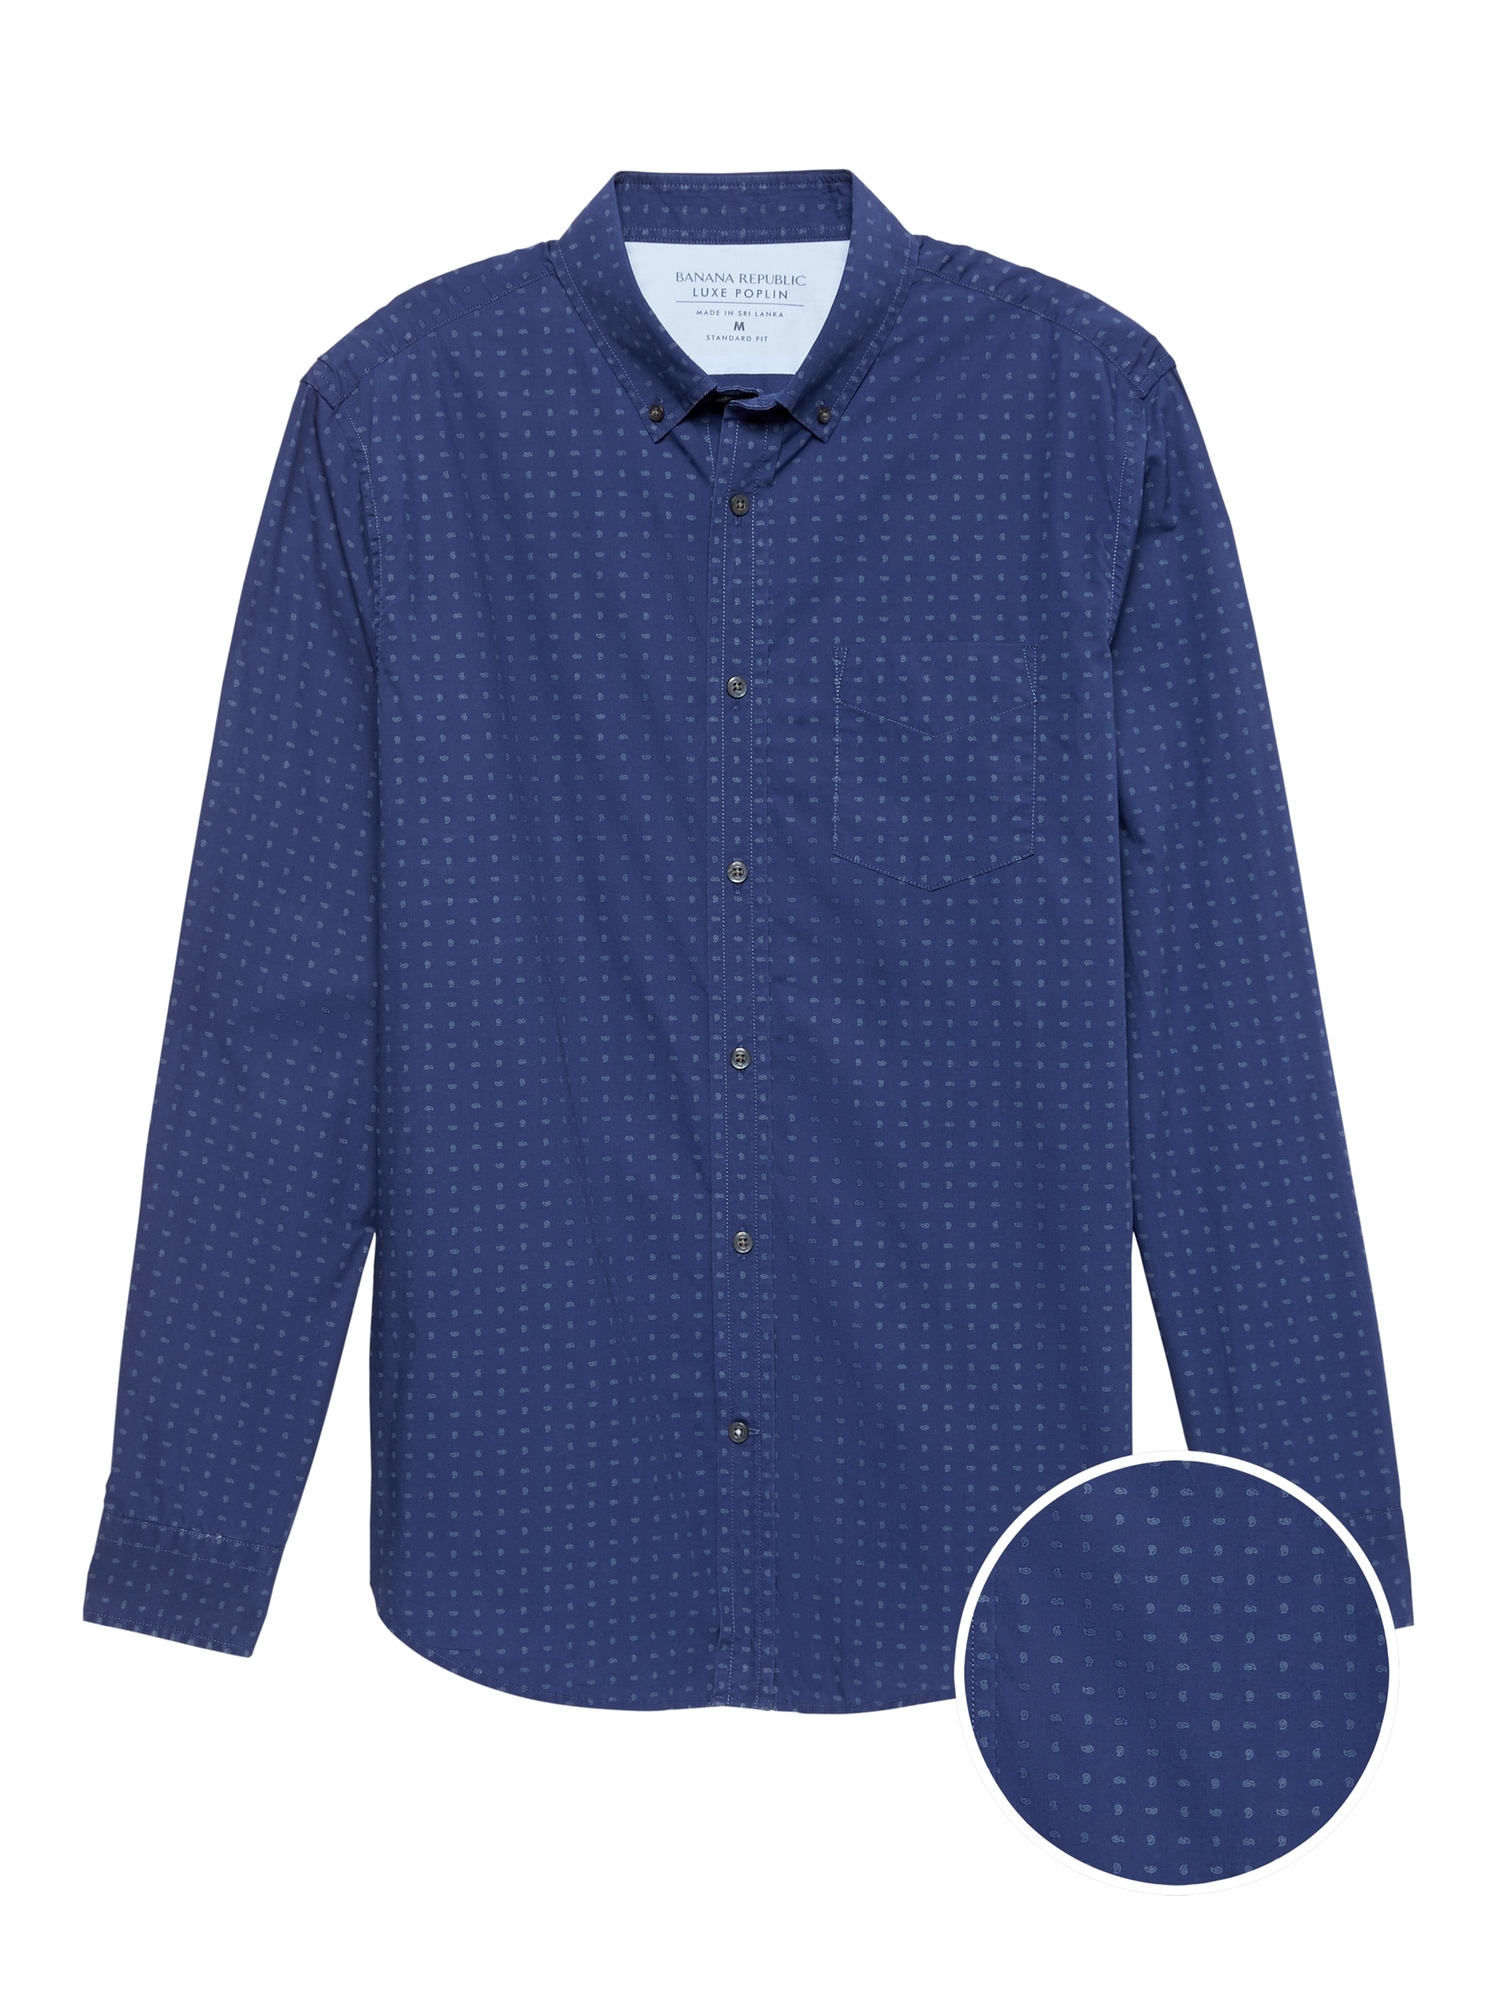 Standard-Fit Luxe Poplin Shirt